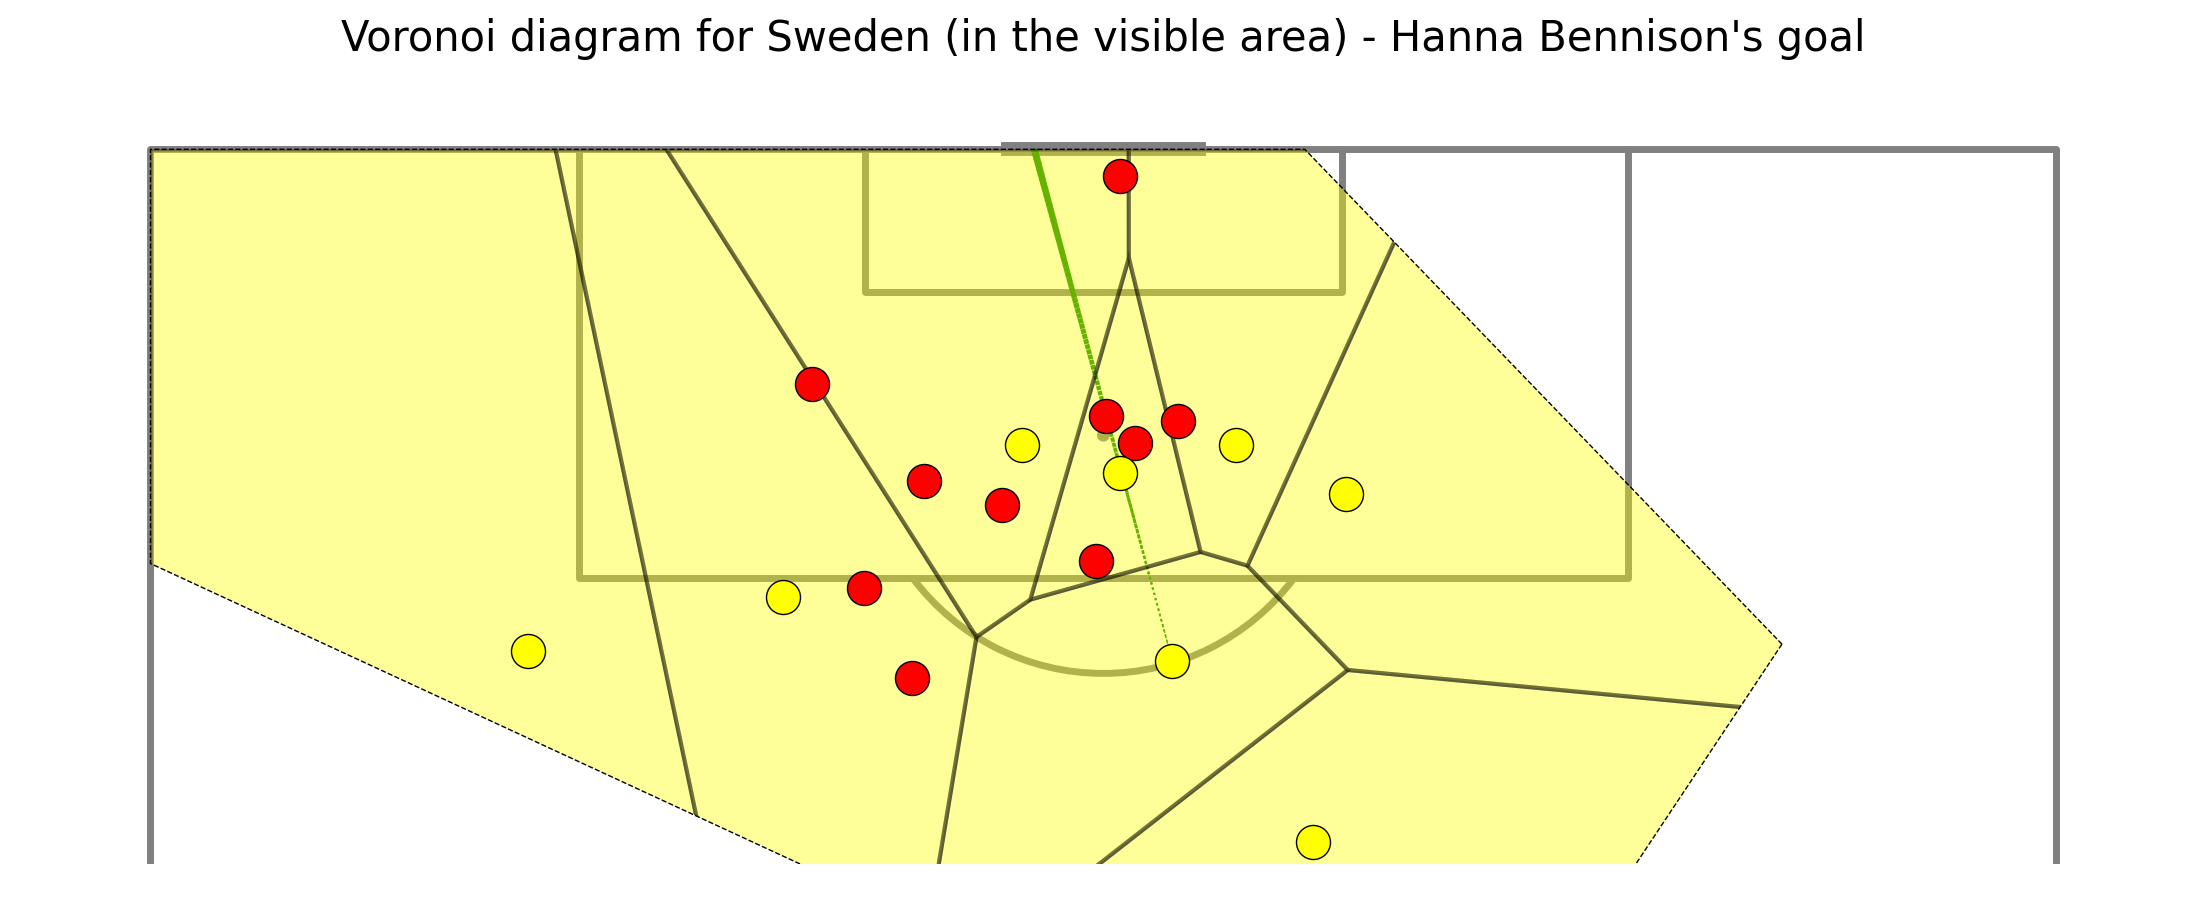 Voronoi diagram for Sweden (in the visible area) - Hanna Bennison's goal